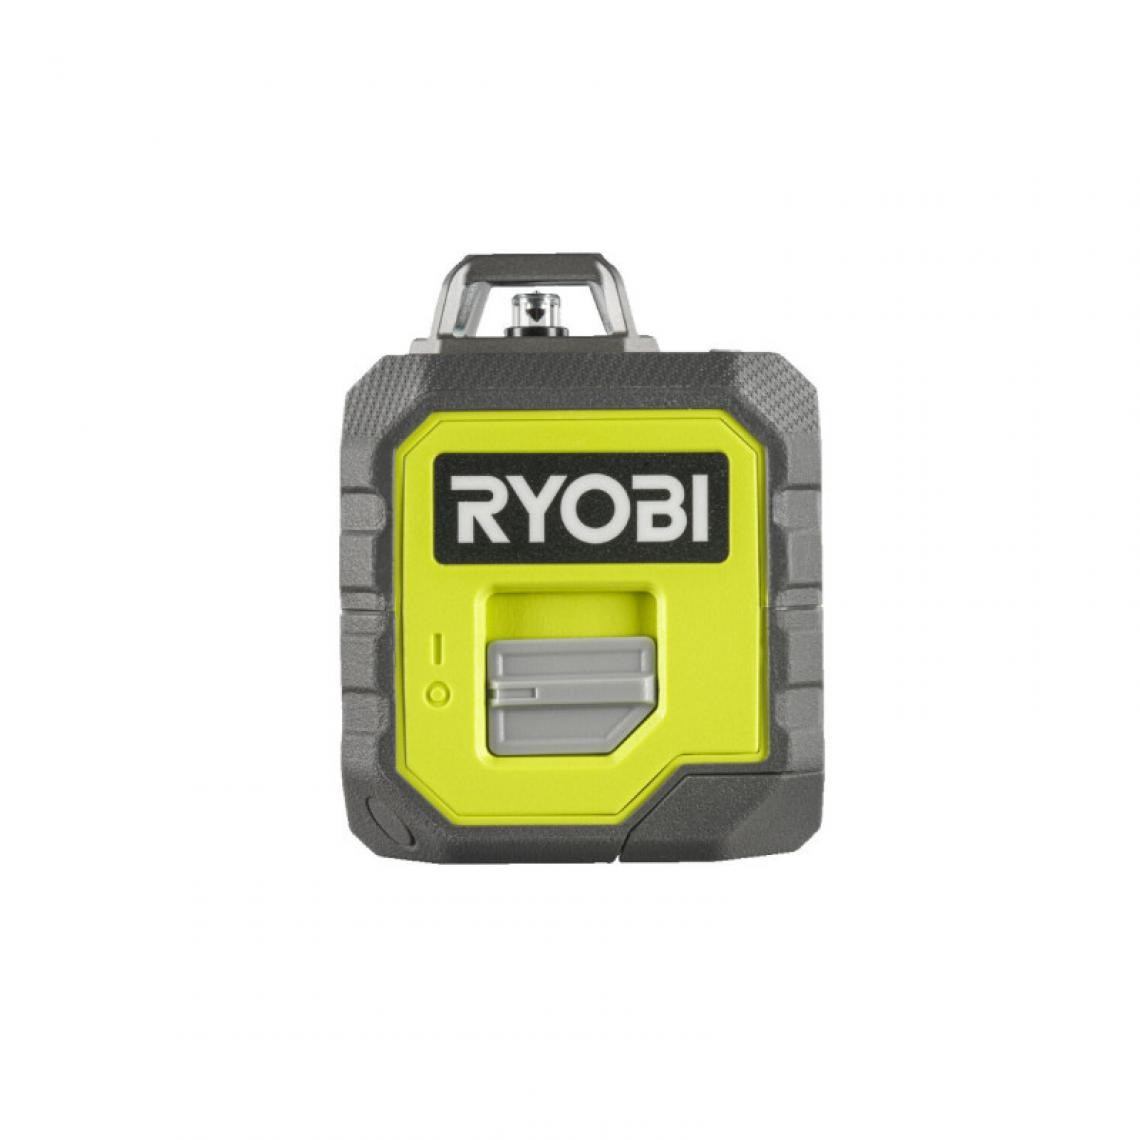 Ryobi - Laser vert 360 RYOBI - 25m de portée - RB360GLL - Niveaux lasers